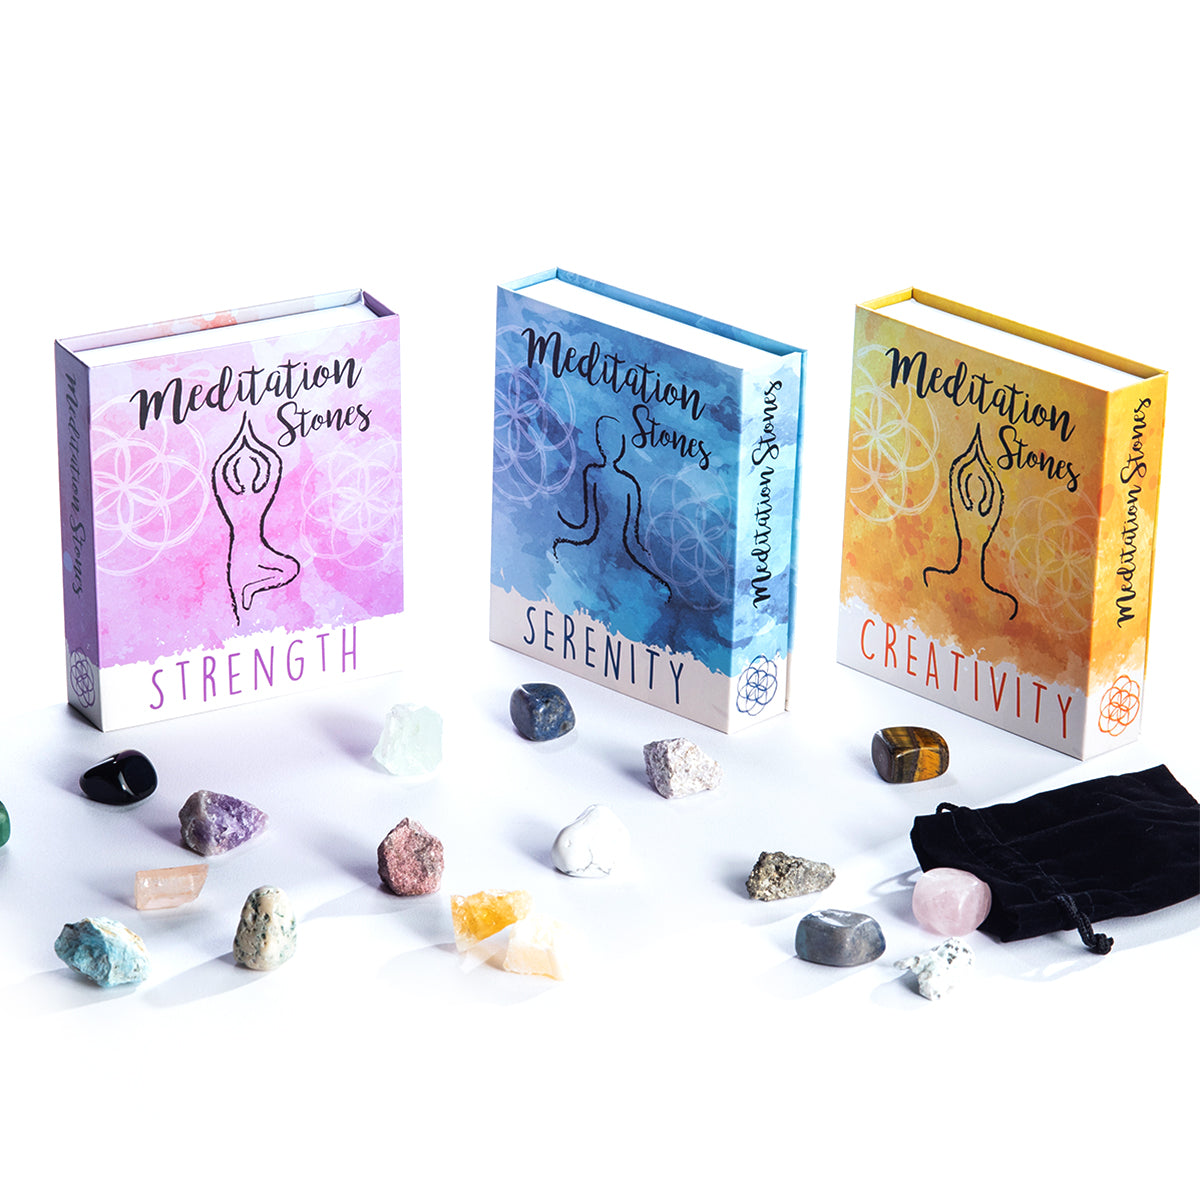 Meditation Stones Set - Creativity